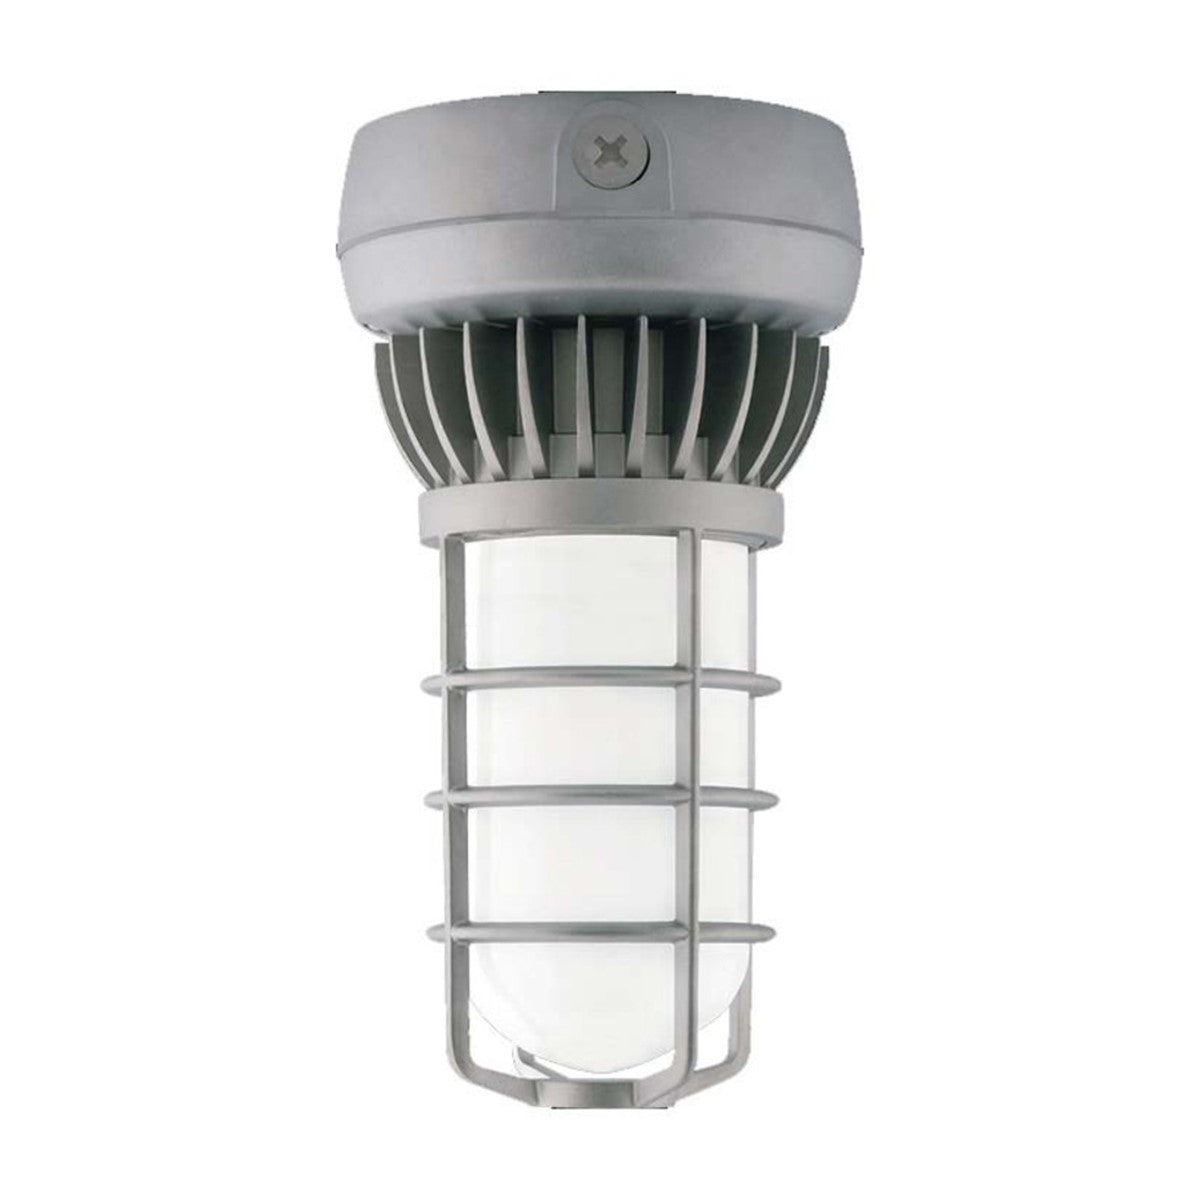 LED Jelly Jar Light Fixture 26 Watts 2,010 Lumens 4900K 120-277V